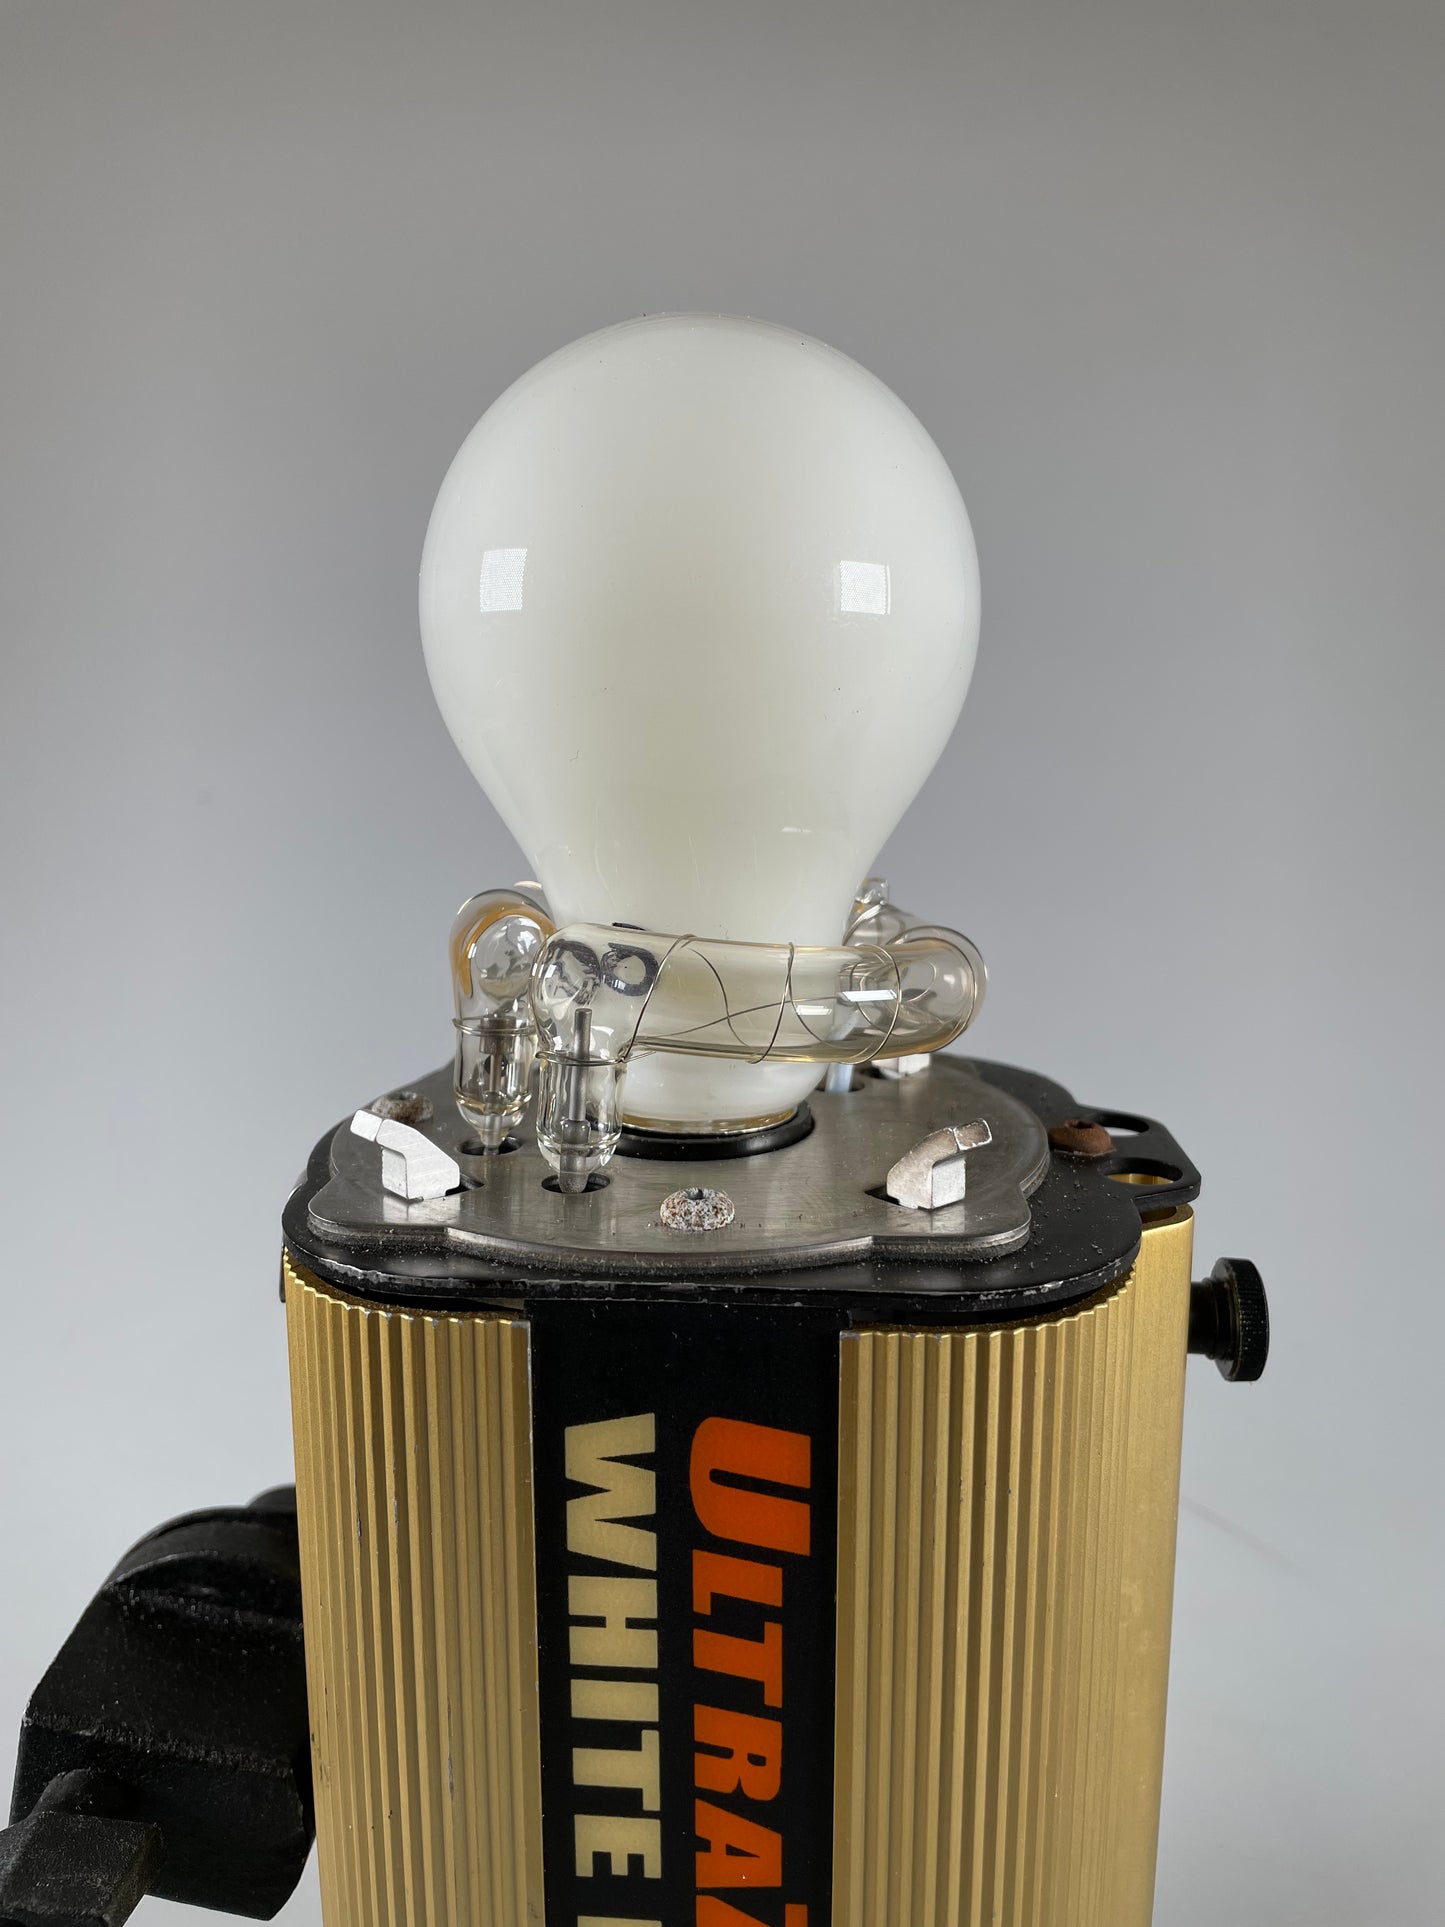 White Lightning UltraZap 1600 Paul C Buff Monolight Flash Unit with Cord and Reflector